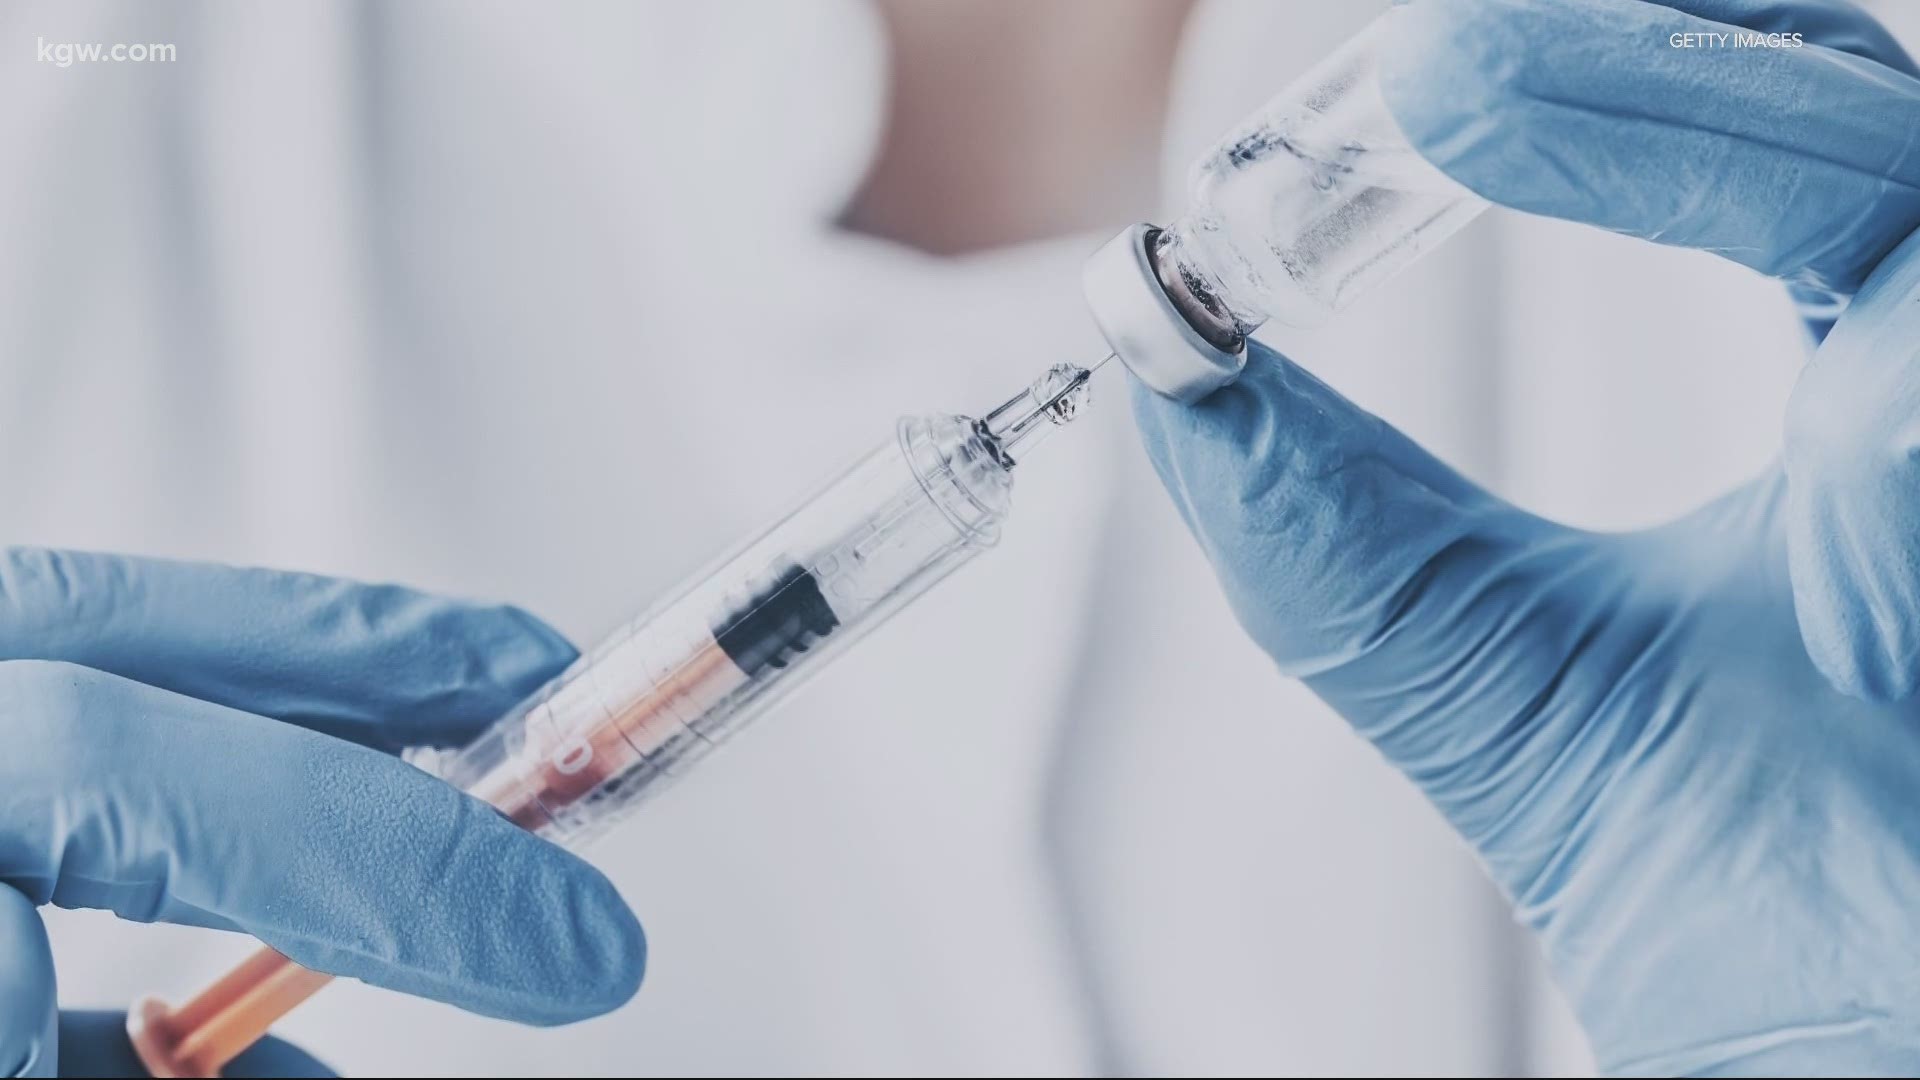 One of Oregon's hardest hit communities is waiting on the coronavirus vaccine.